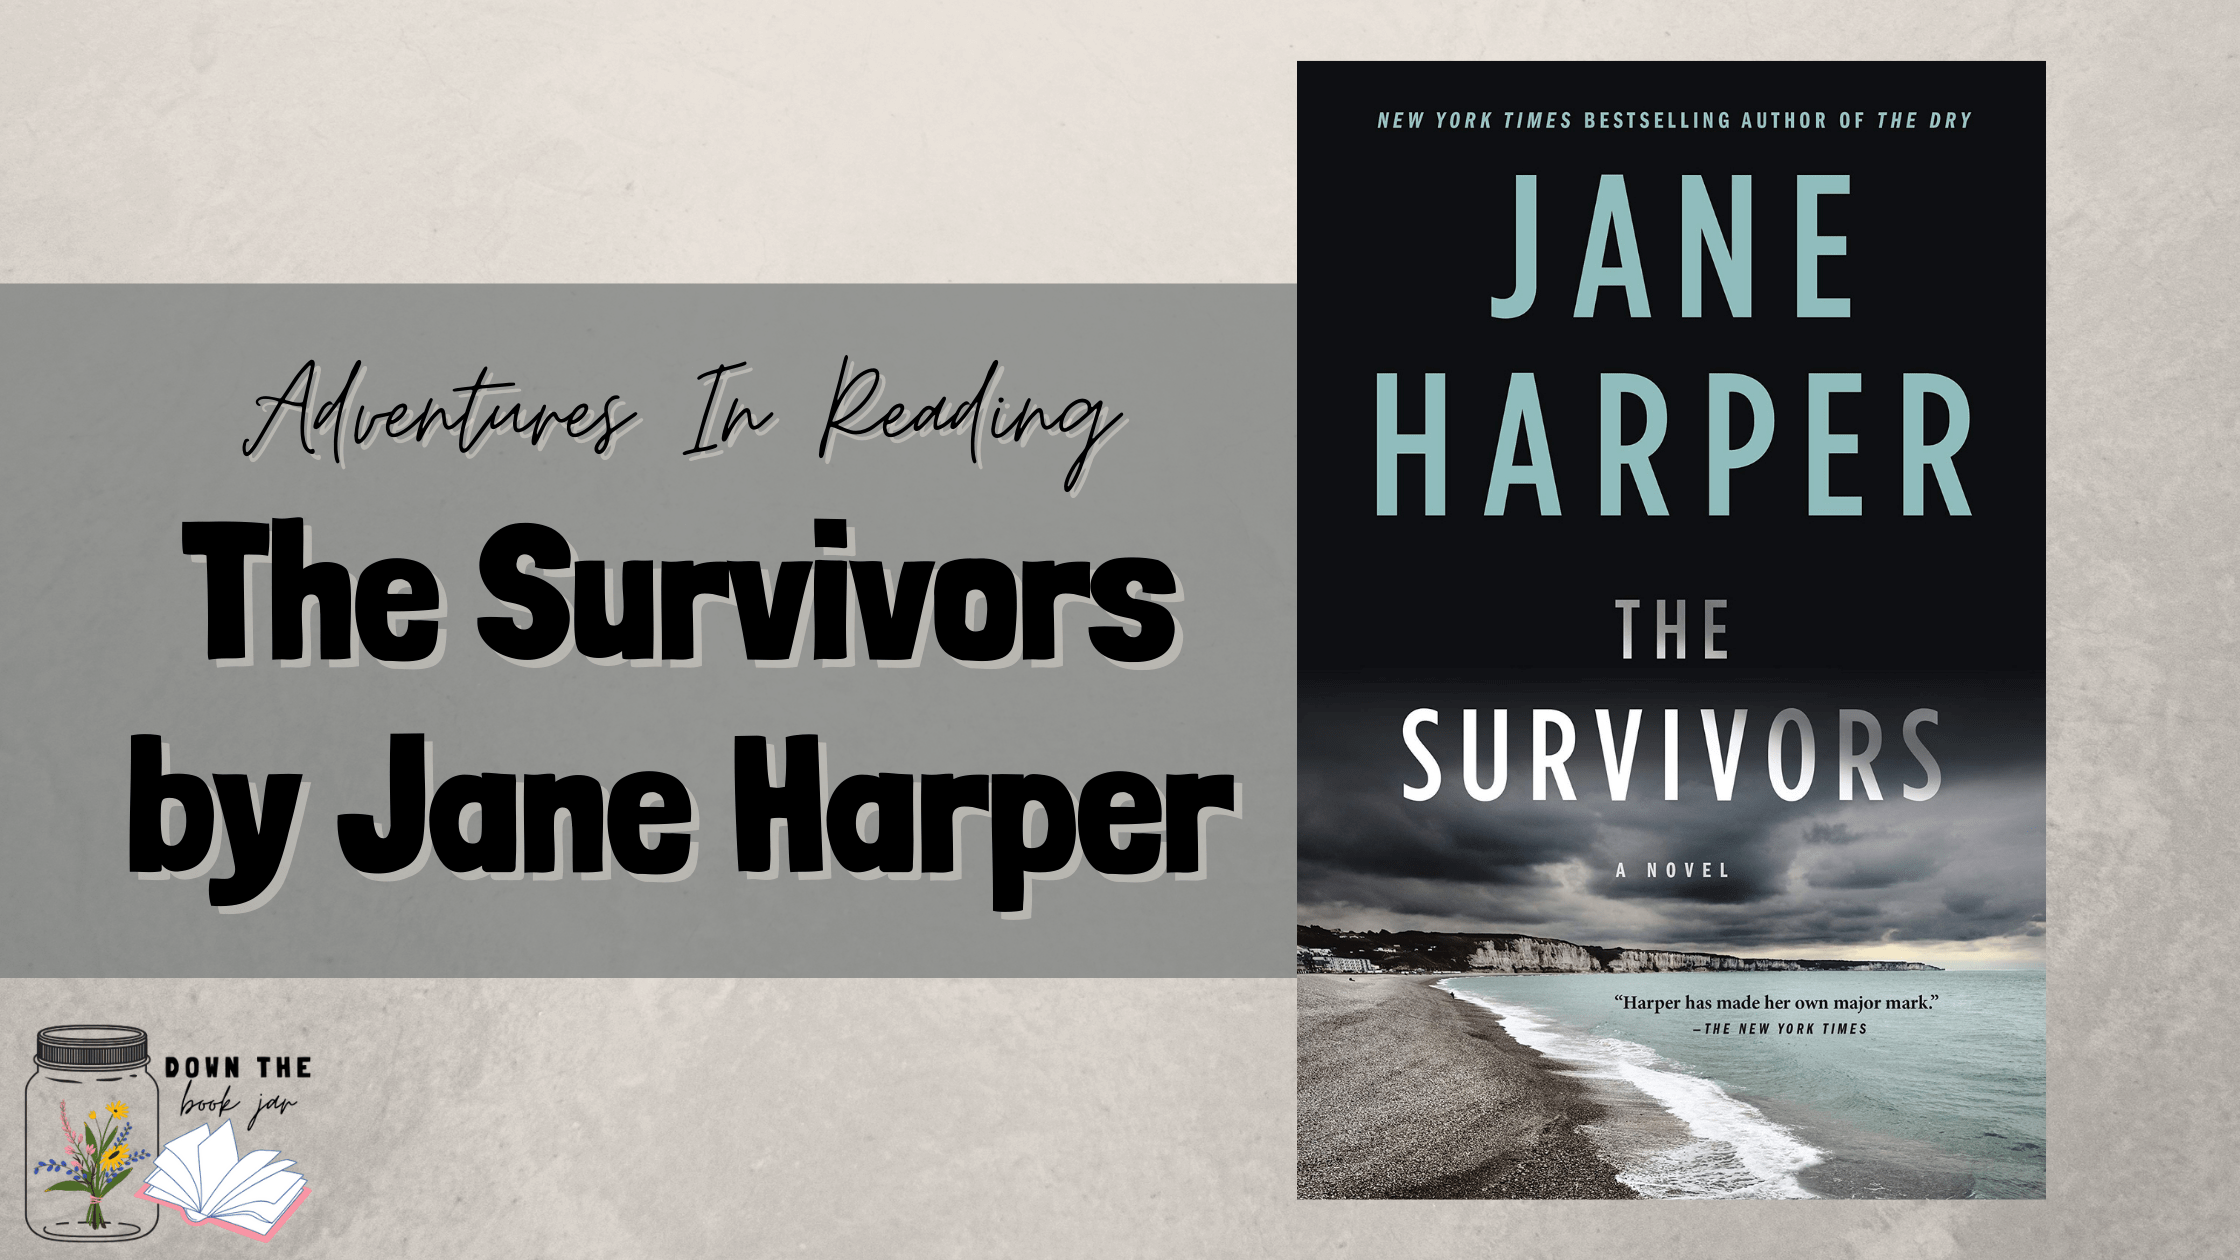 The Survivors by Jane Harper